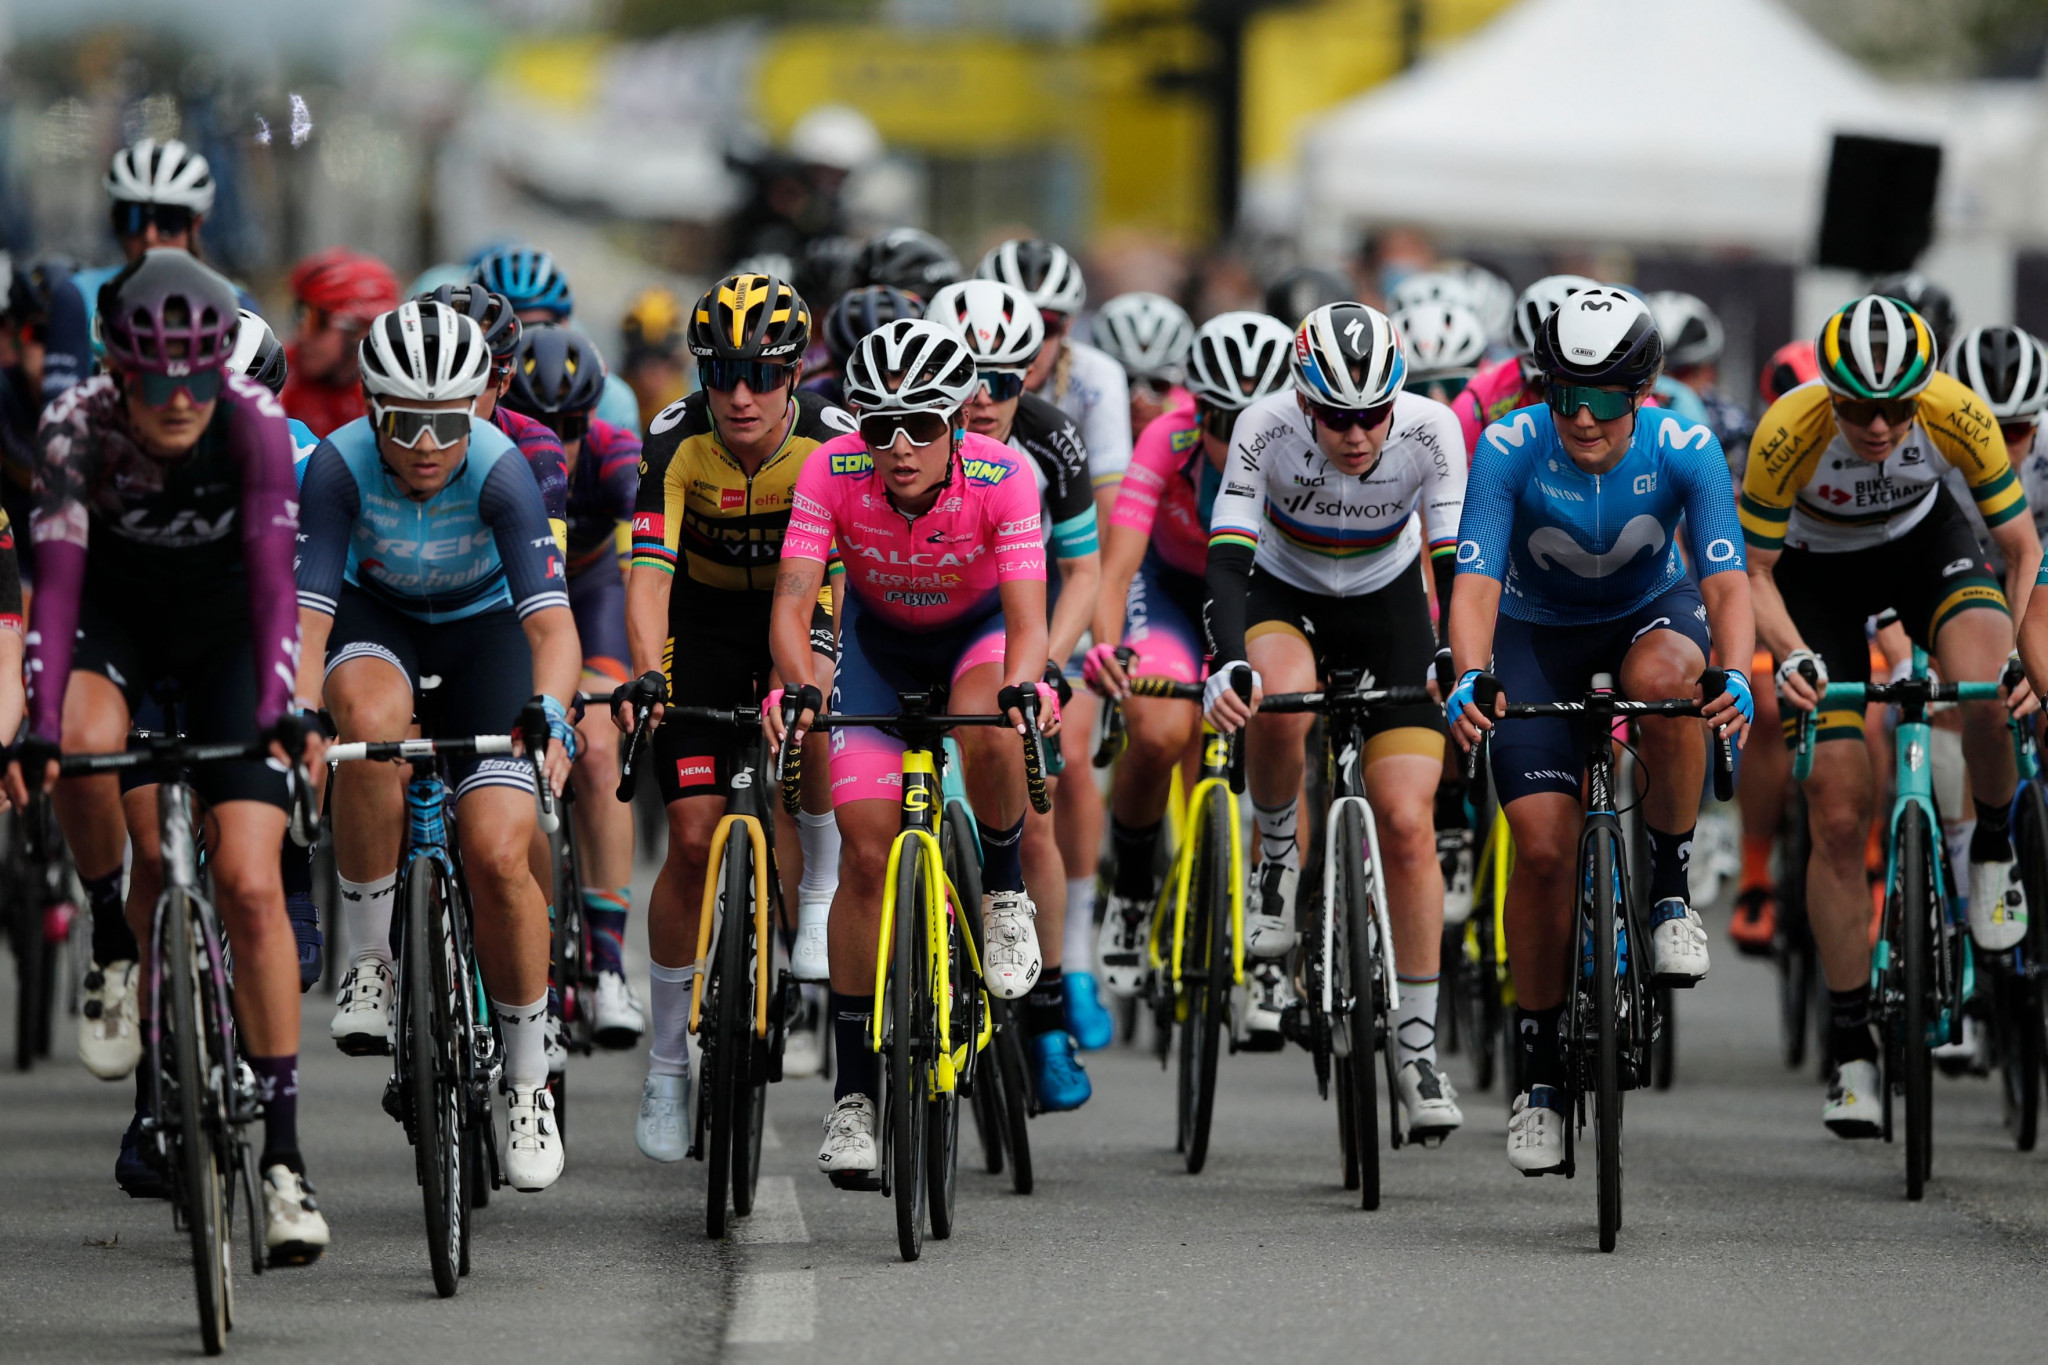 Bizkaia-Durango pull last rider from Giro Donne following positive COVID-19 test